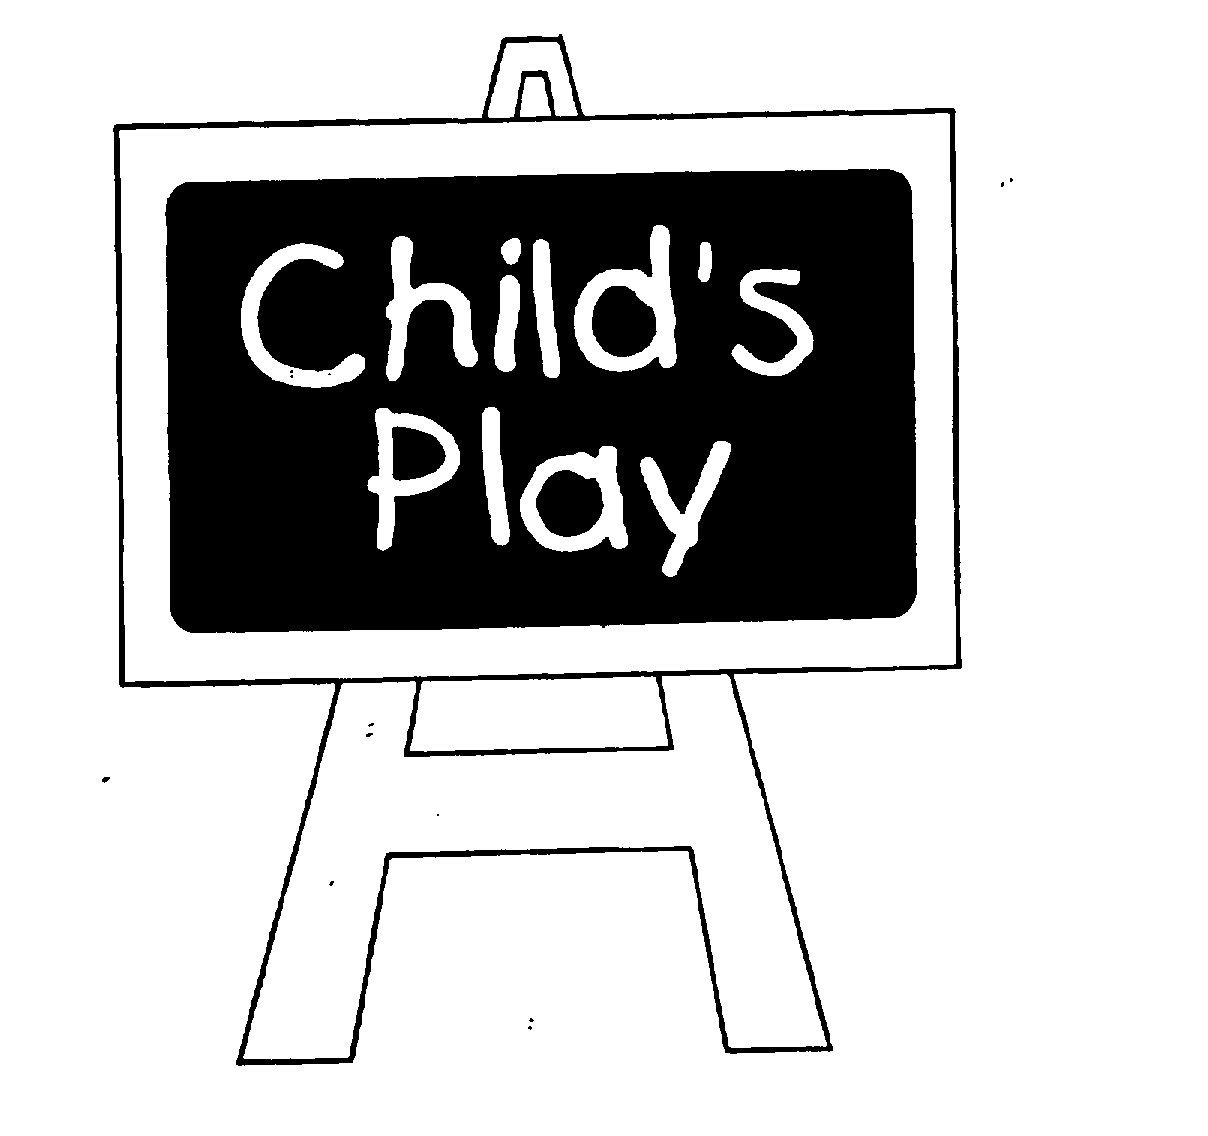 CHILD'S PLAY